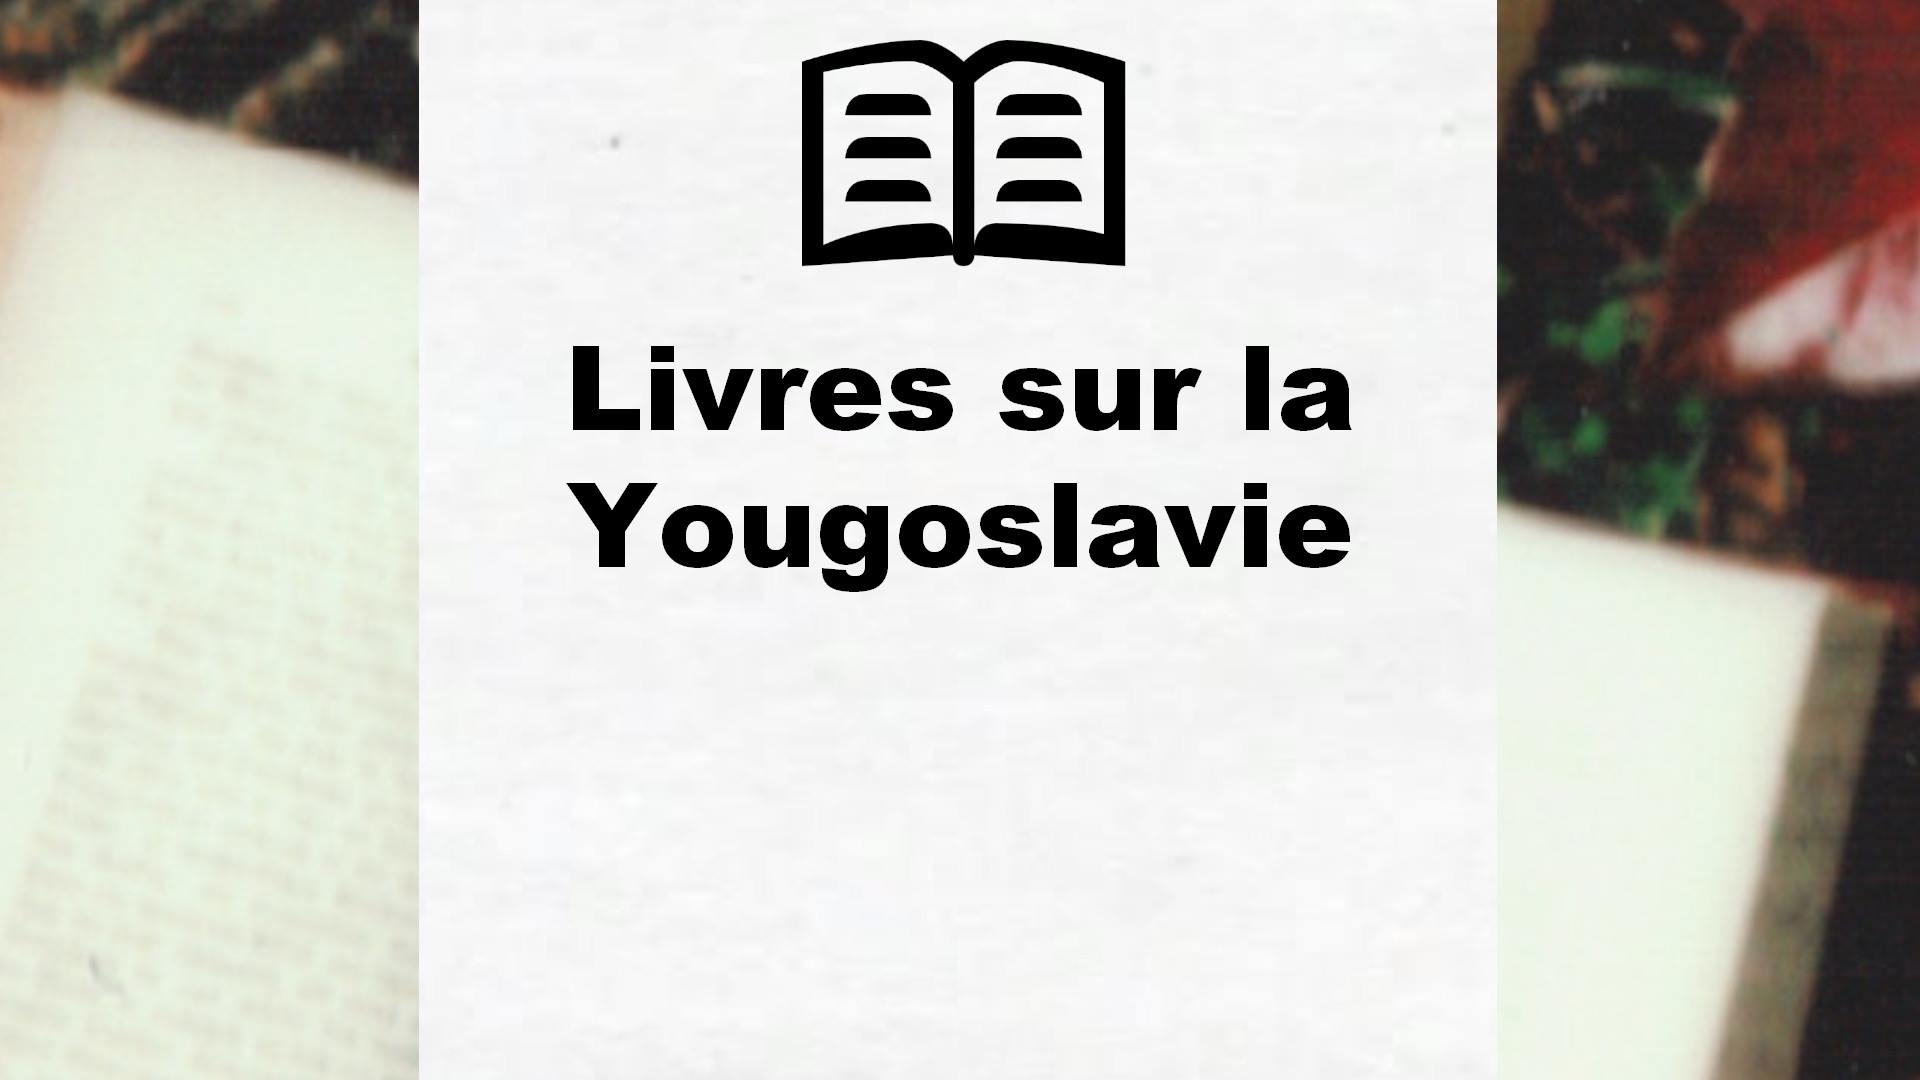 Livres sur la Yougoslavie